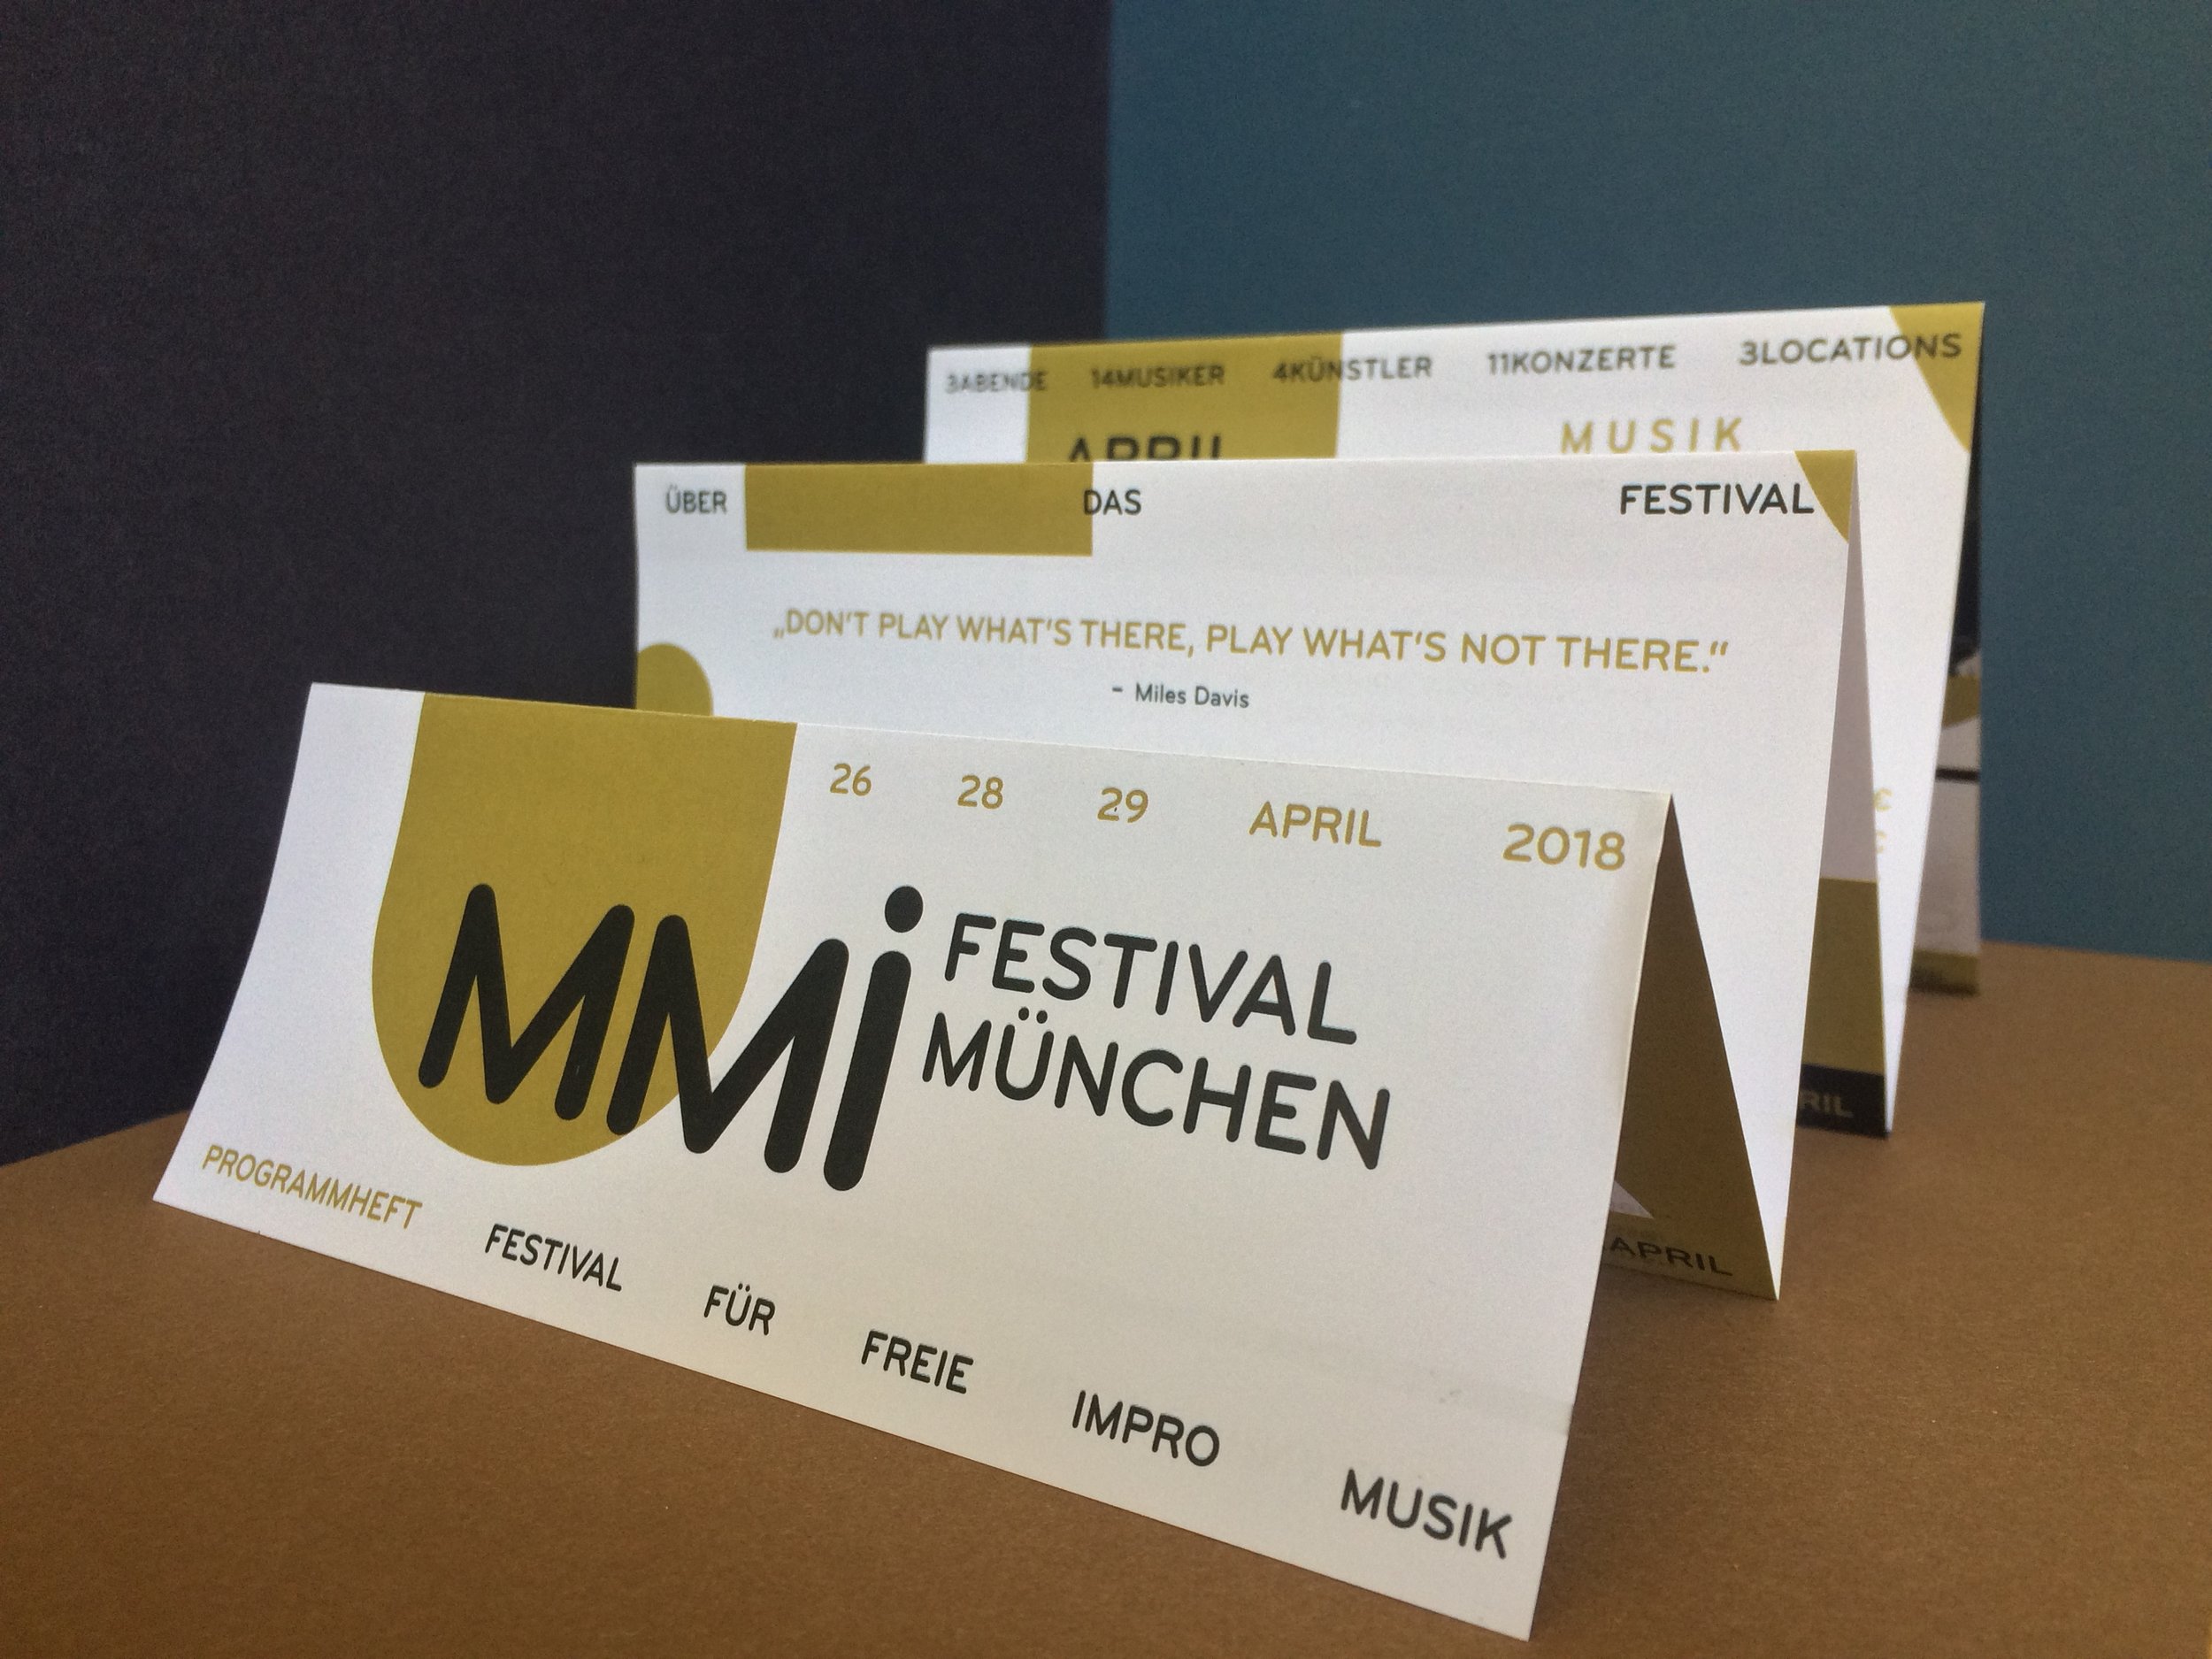 MMI_Festival_2018_Programmheft_michael-seidl-com2.JPG